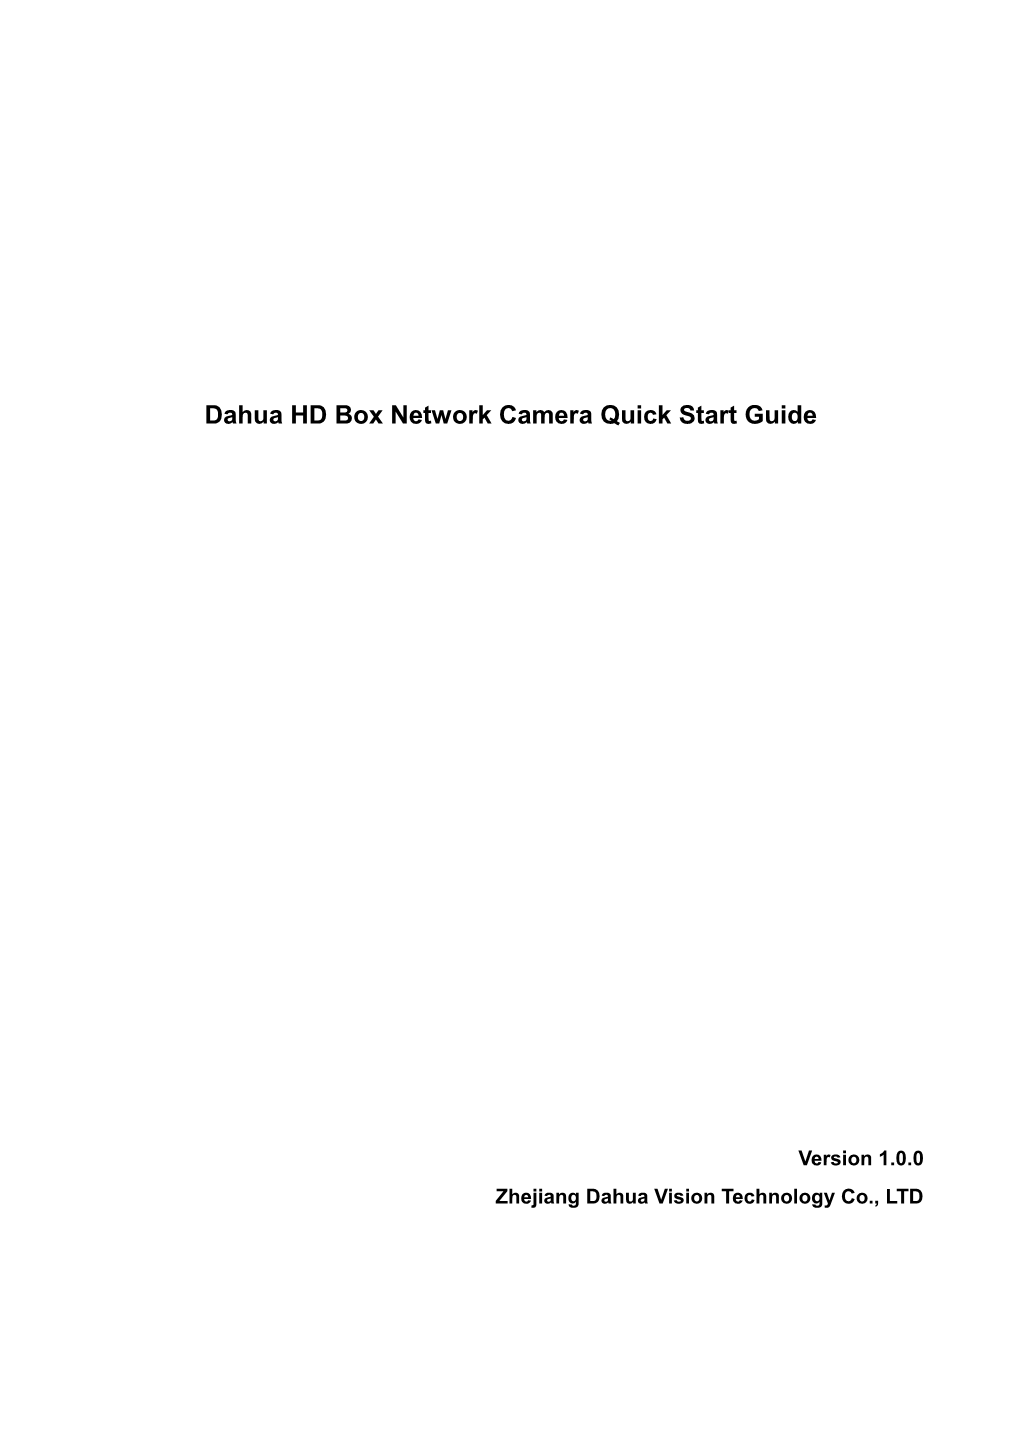 F Series Indoor IP Camera Quick Start Guide